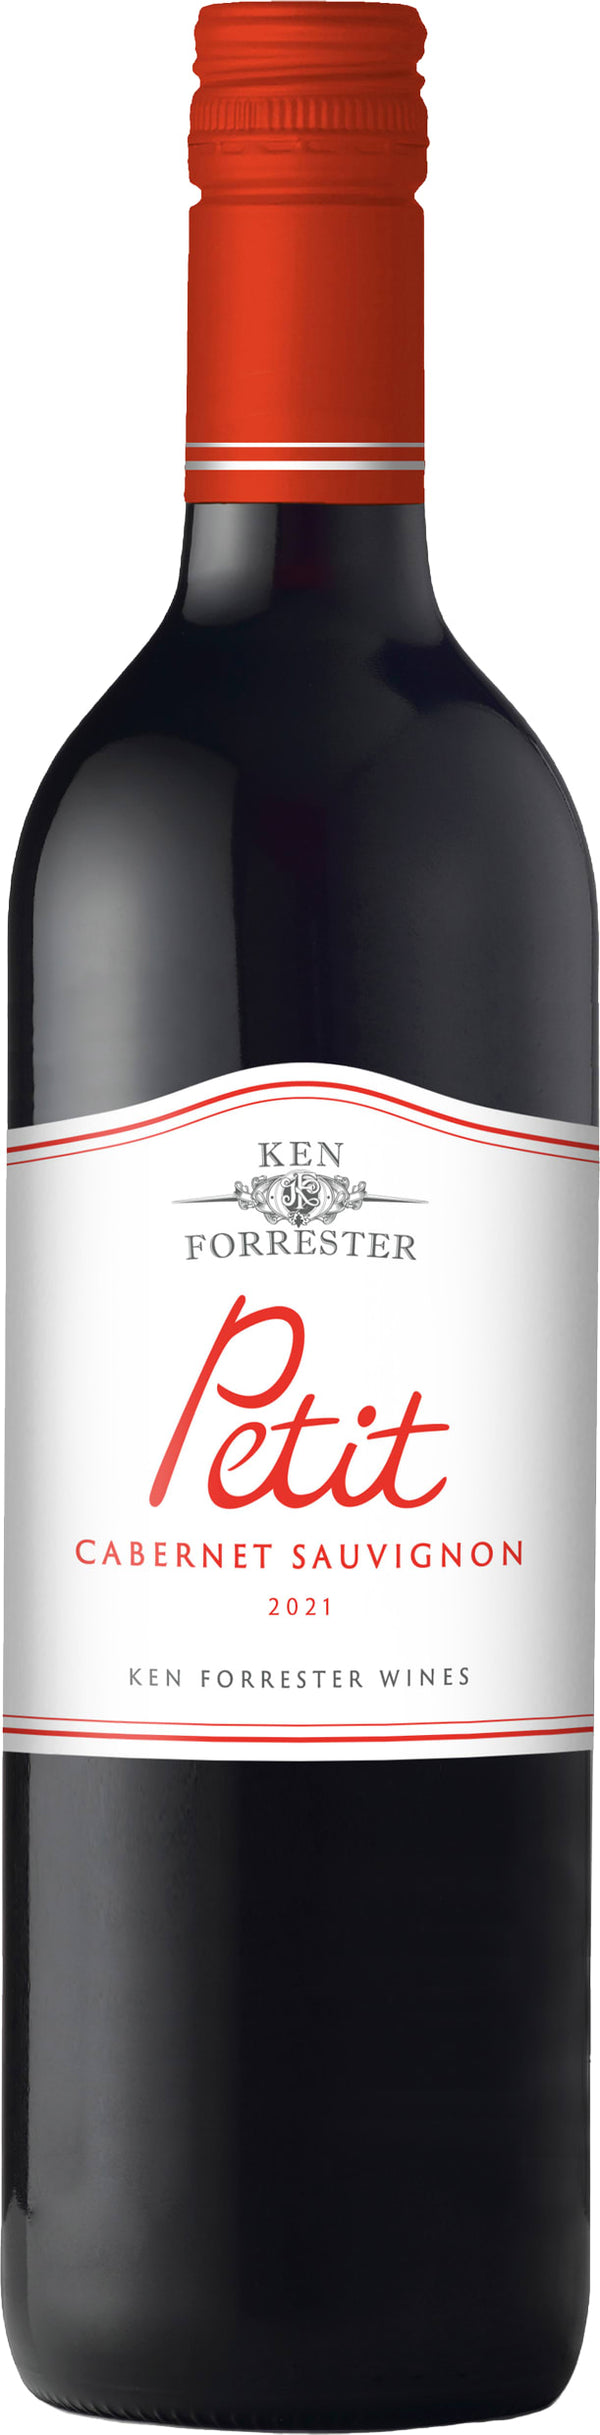 Ken Forrester Wines Petit Cabernet Sauvignon 2022 6x75cl - Just Wines 